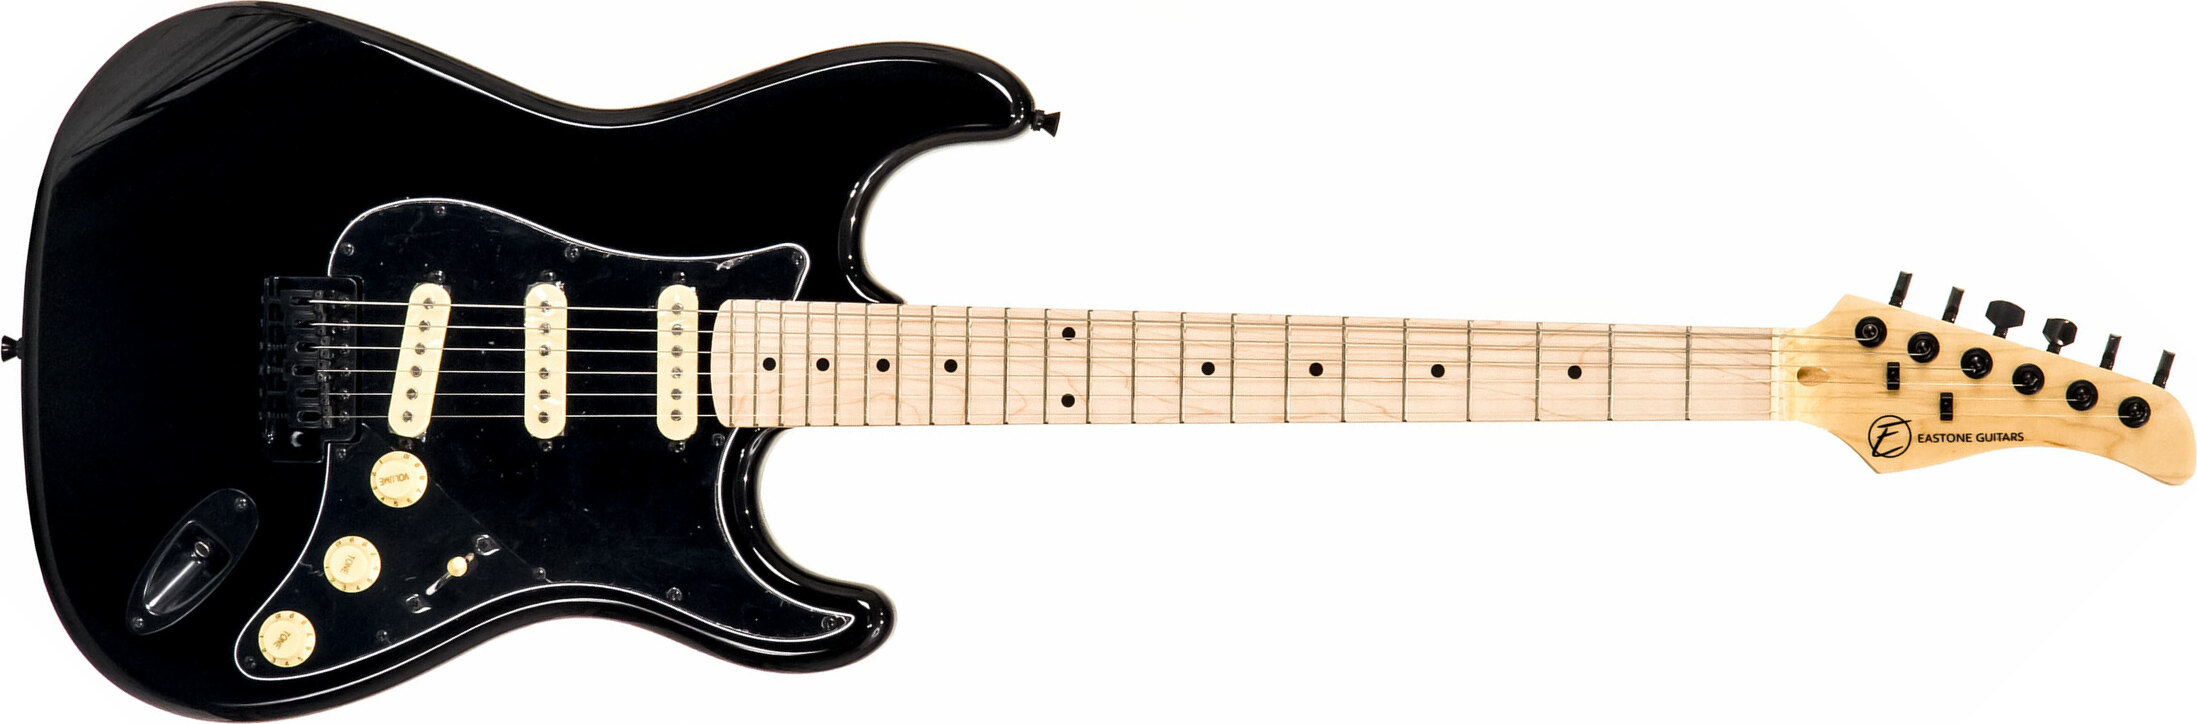 Eastone Str70 Gil Sss Trem Mn - Black - Elektrische gitaar in Str-vorm - Main picture